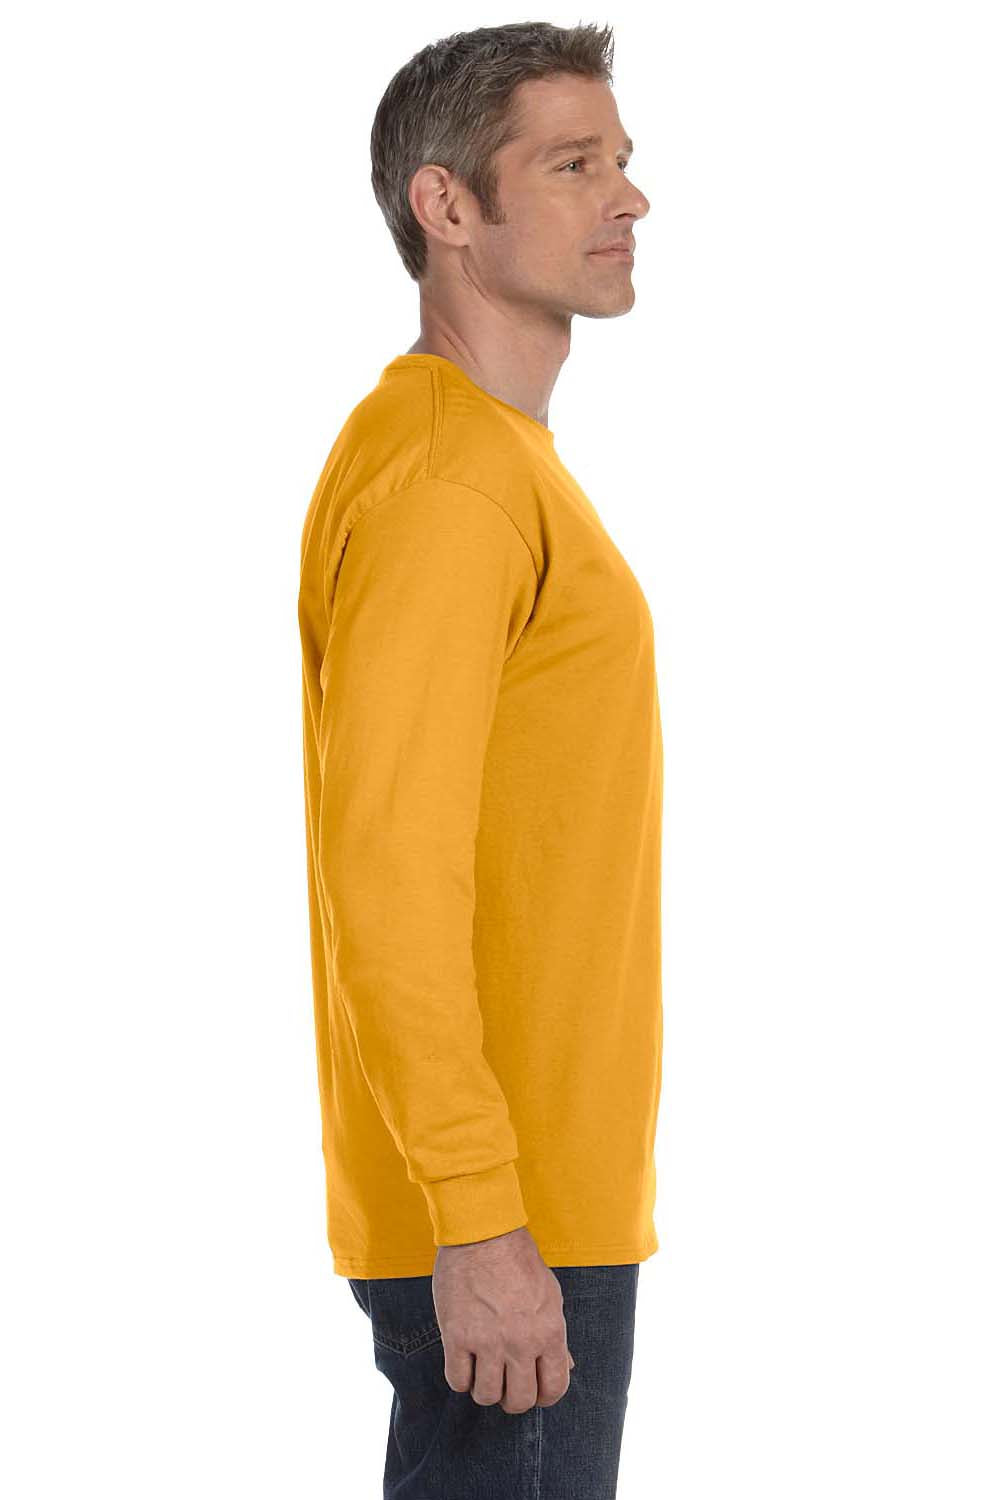 Jerzees 29L Mens Dri-Power Moisture Wicking Long Sleeve Crewneck T-Shirt Gold Side